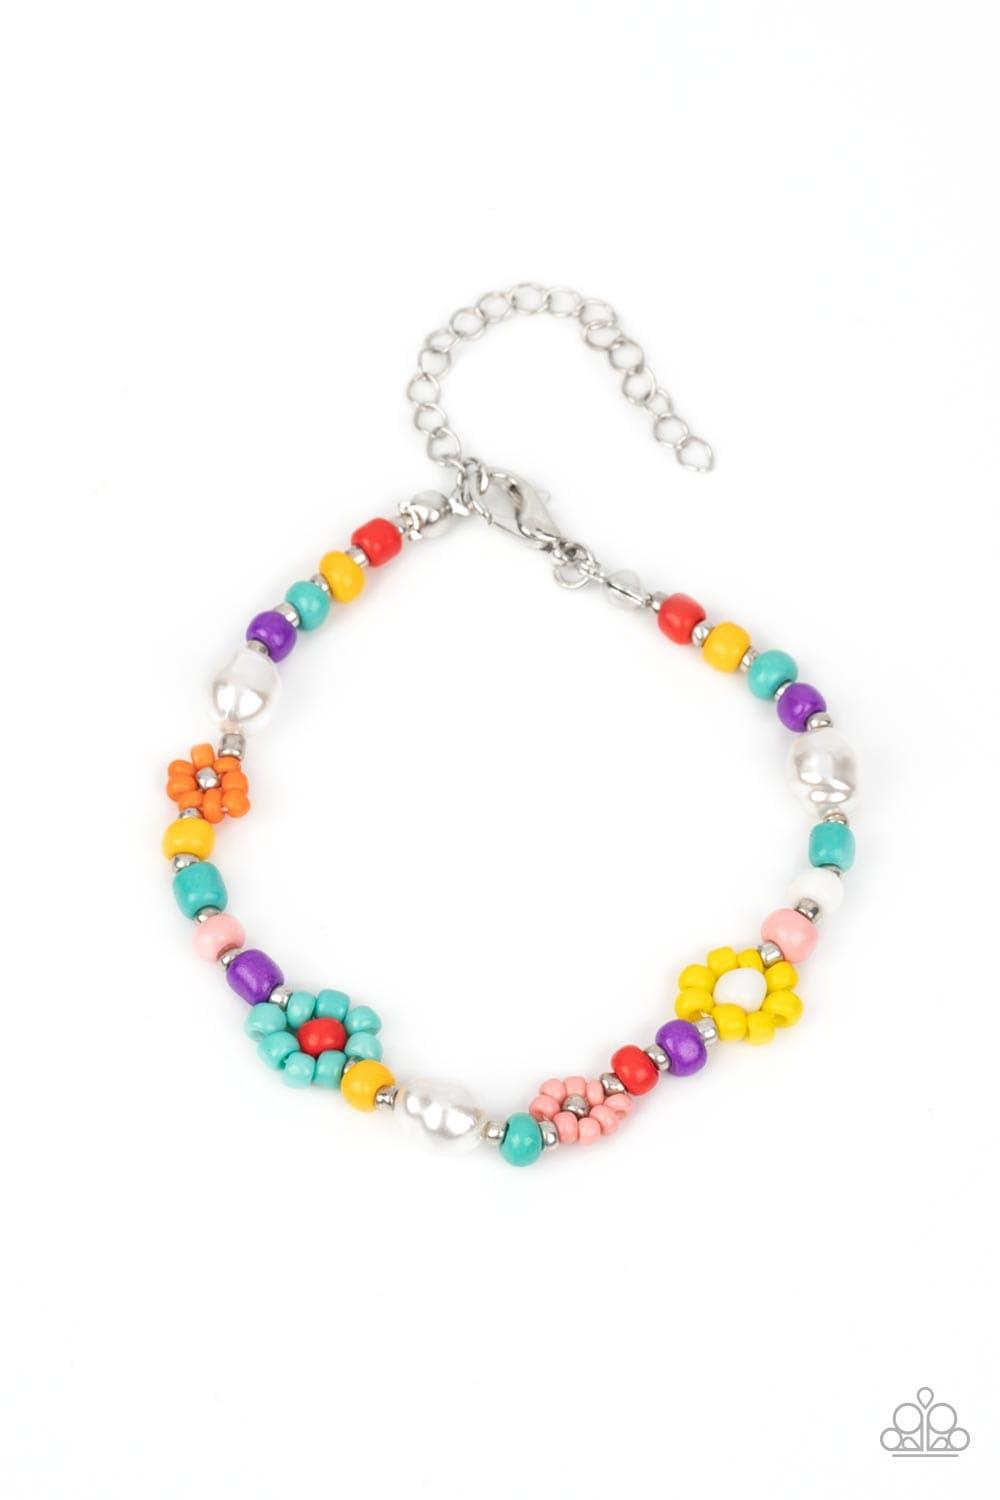 Paparazzi Accessories - Groovy Gerberas - Multicolor Bracelet - Bling by JessieK